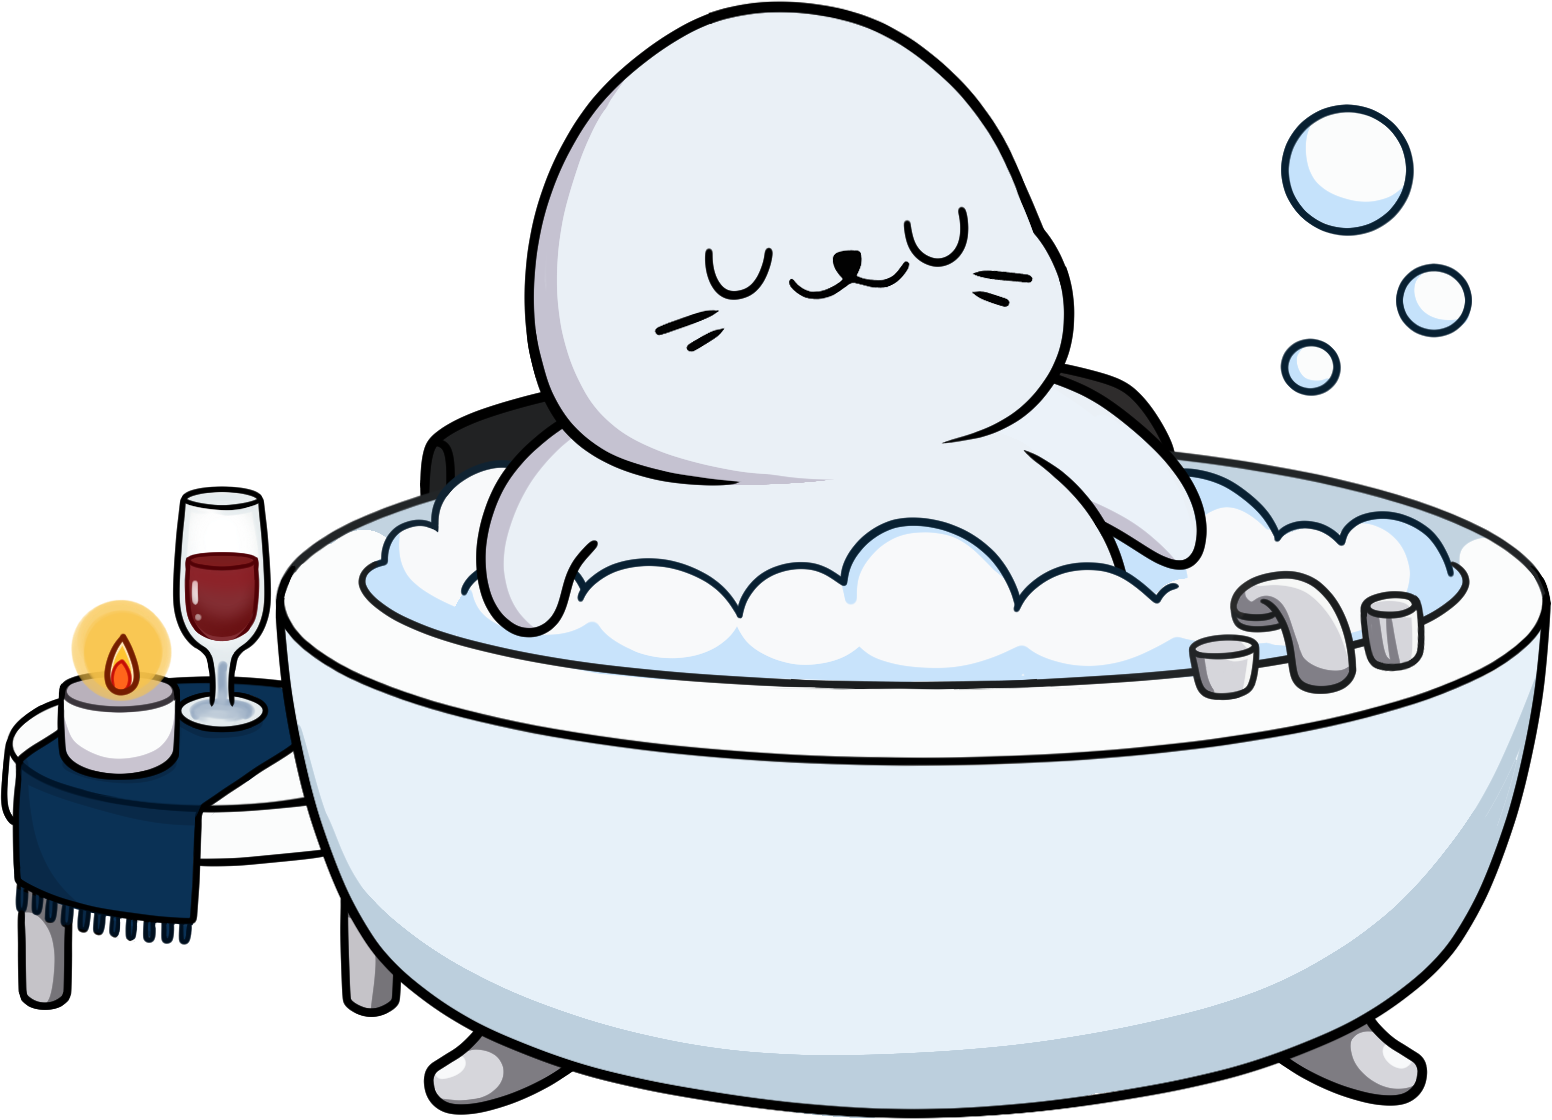 Seal chilling in bathtub.